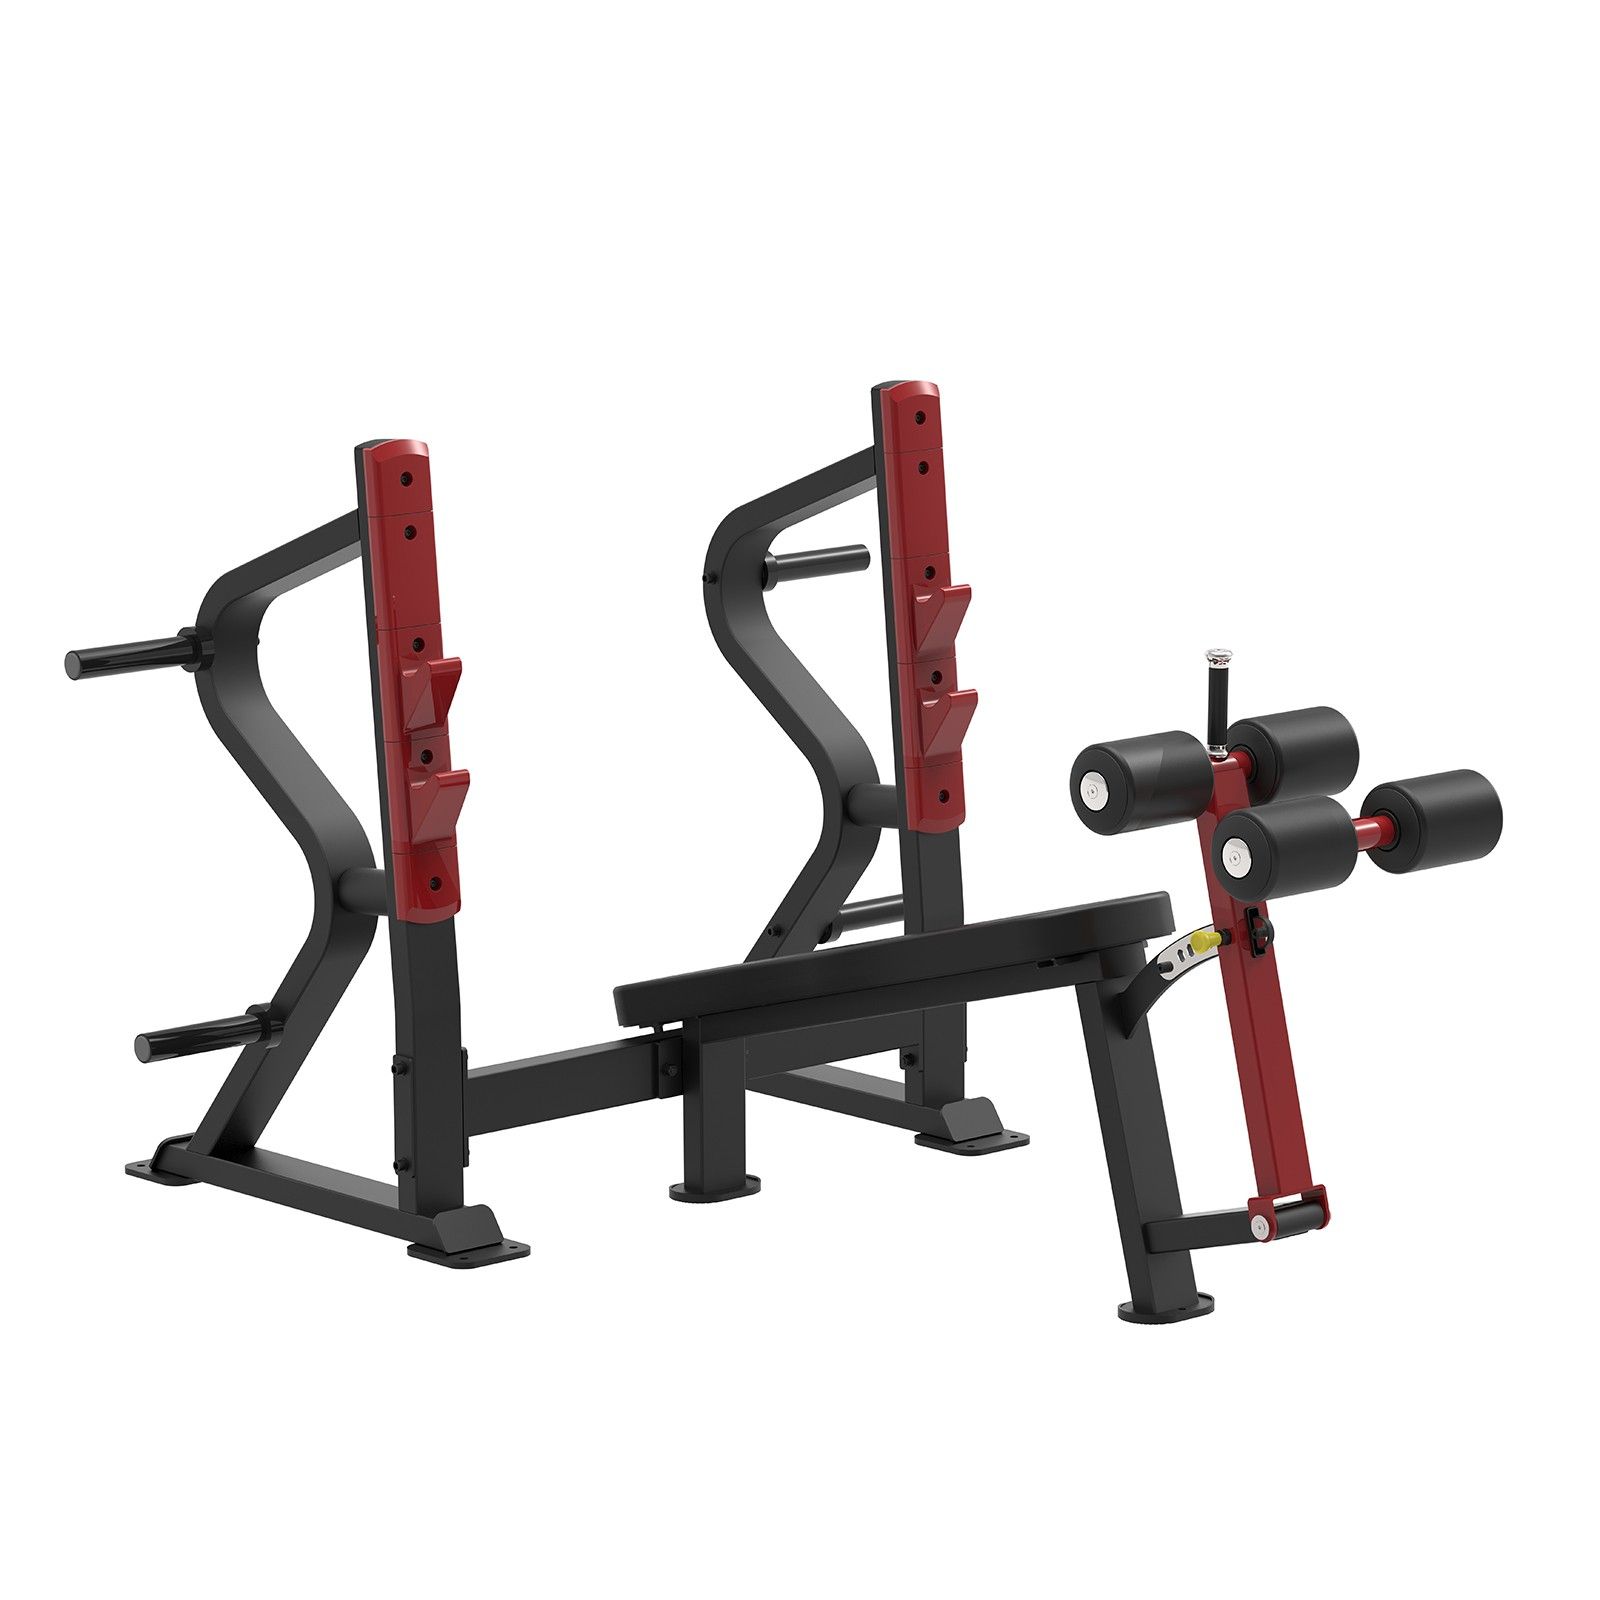 Impulse Sterling Commercial Adjustable Bench Dumbbell Gym Fitness In Stock NEW 